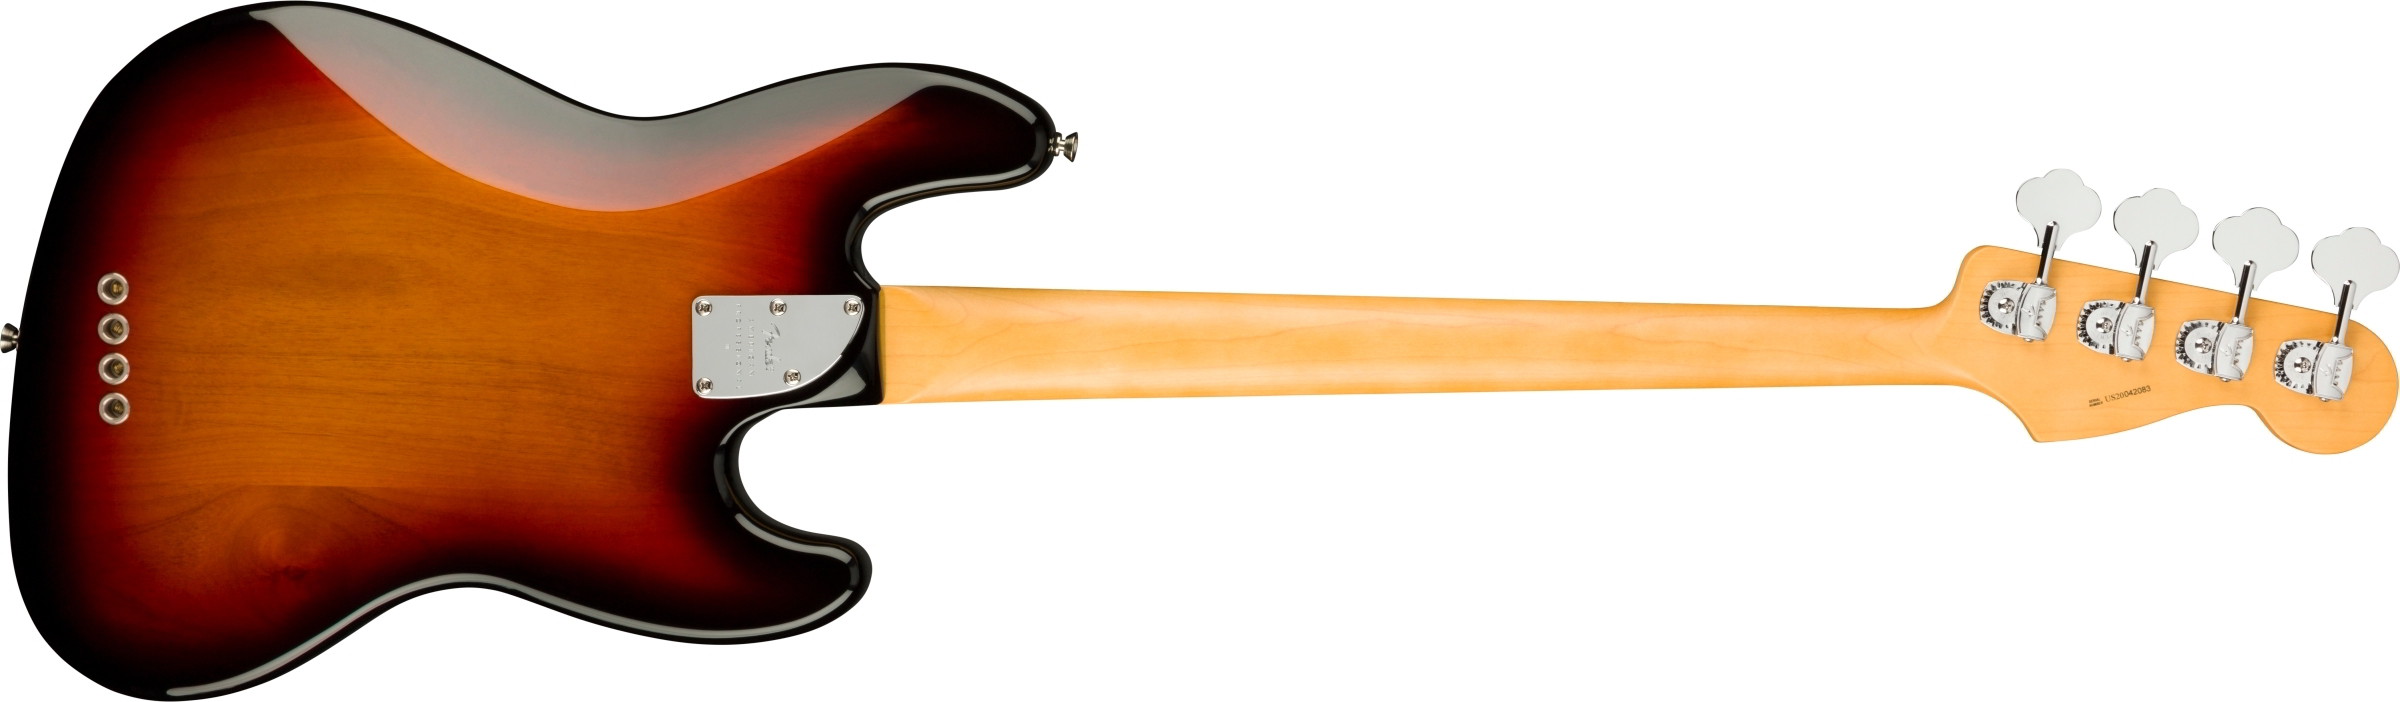 American Professional II Jazz Bass Left-Hand, Rosewood Fingerboard, 3-Color Sunburst背面画像